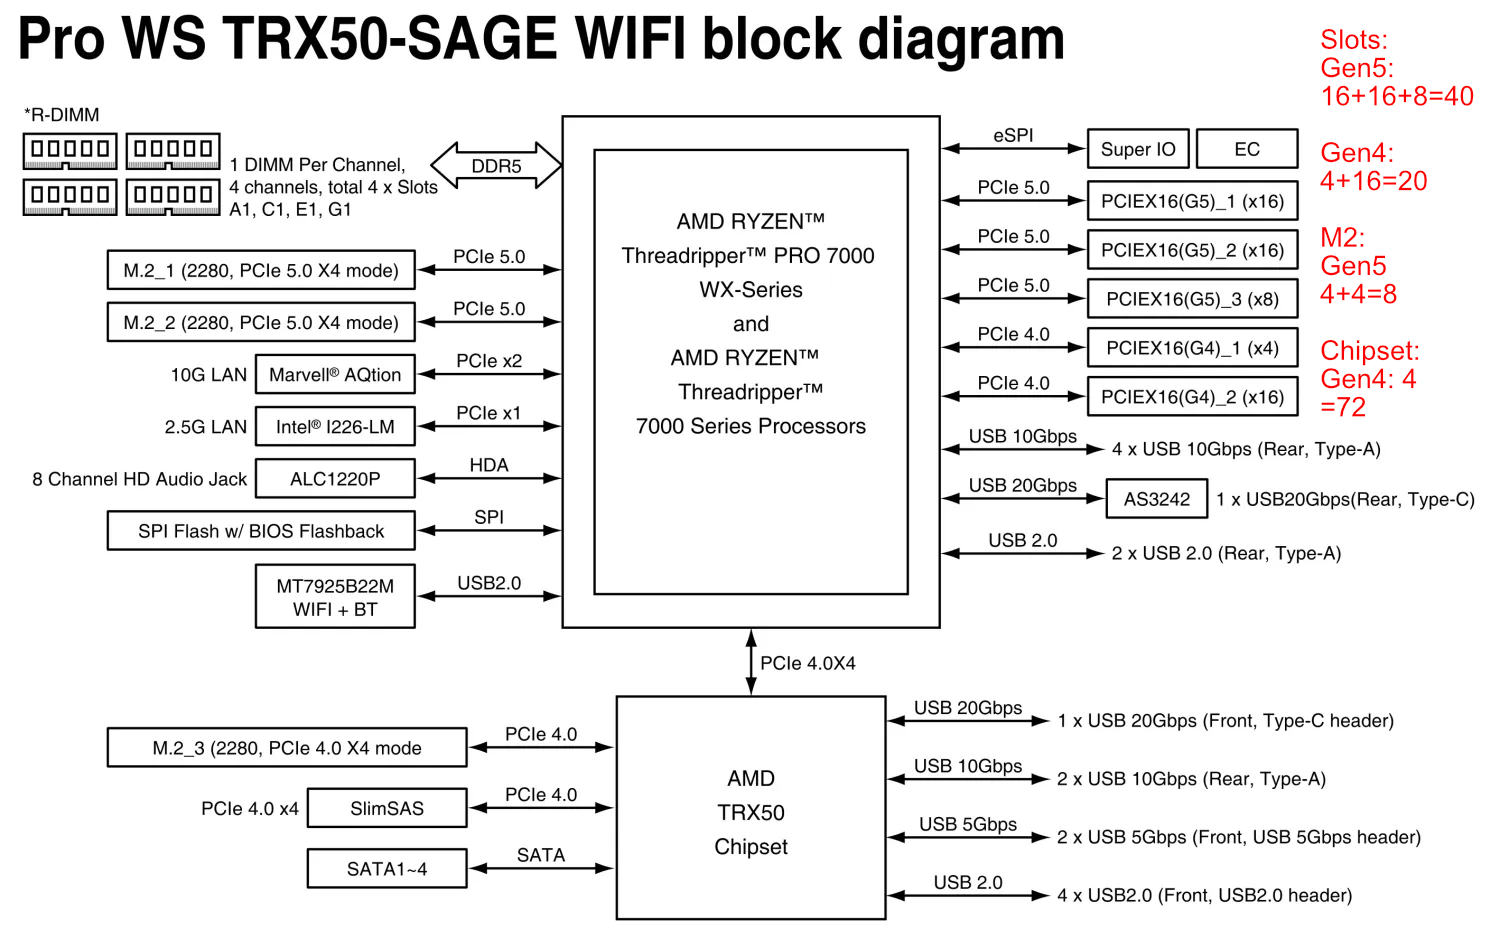 trx50 sage blockdiagramm.png